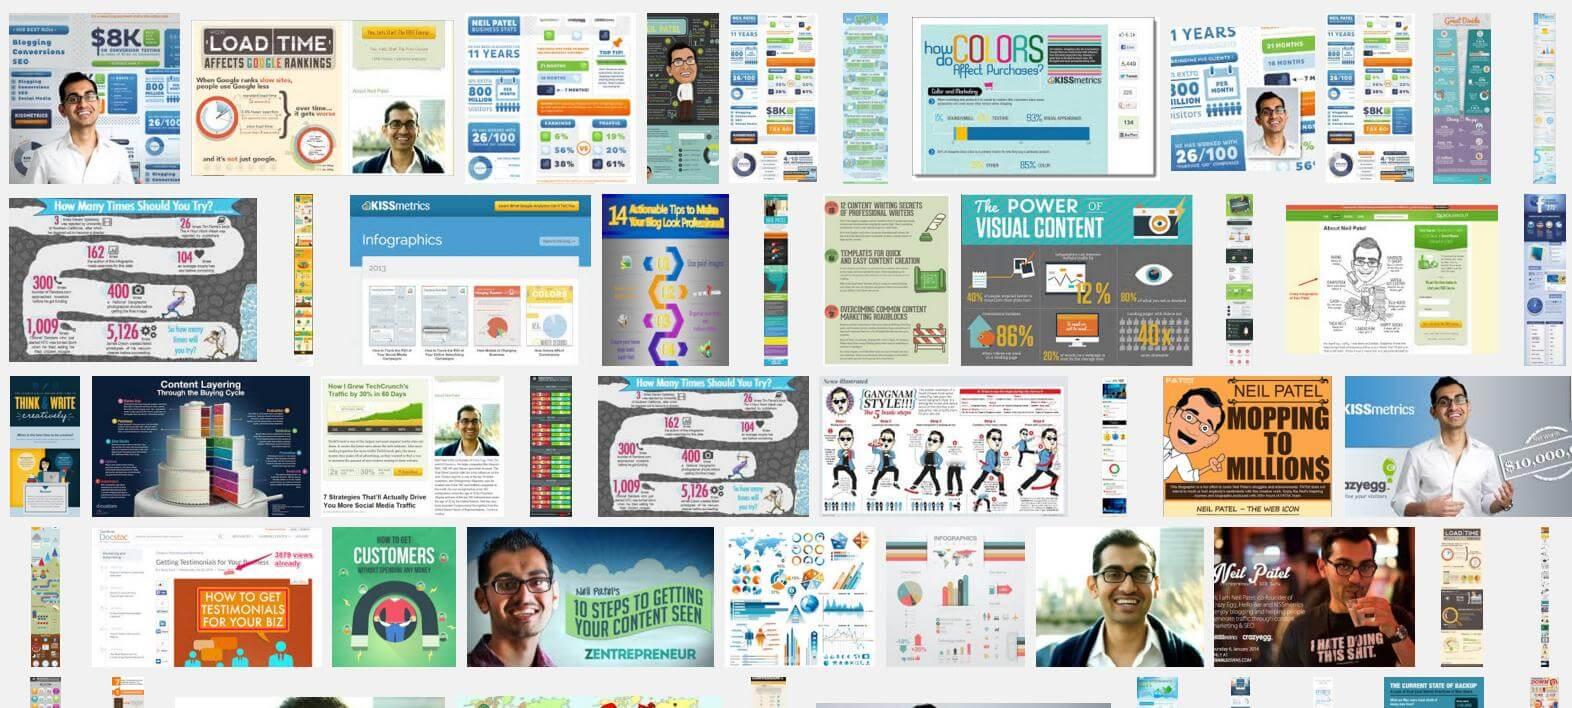 neil patel infographics - Google Search 2015-11-17 07-54-54.jpg